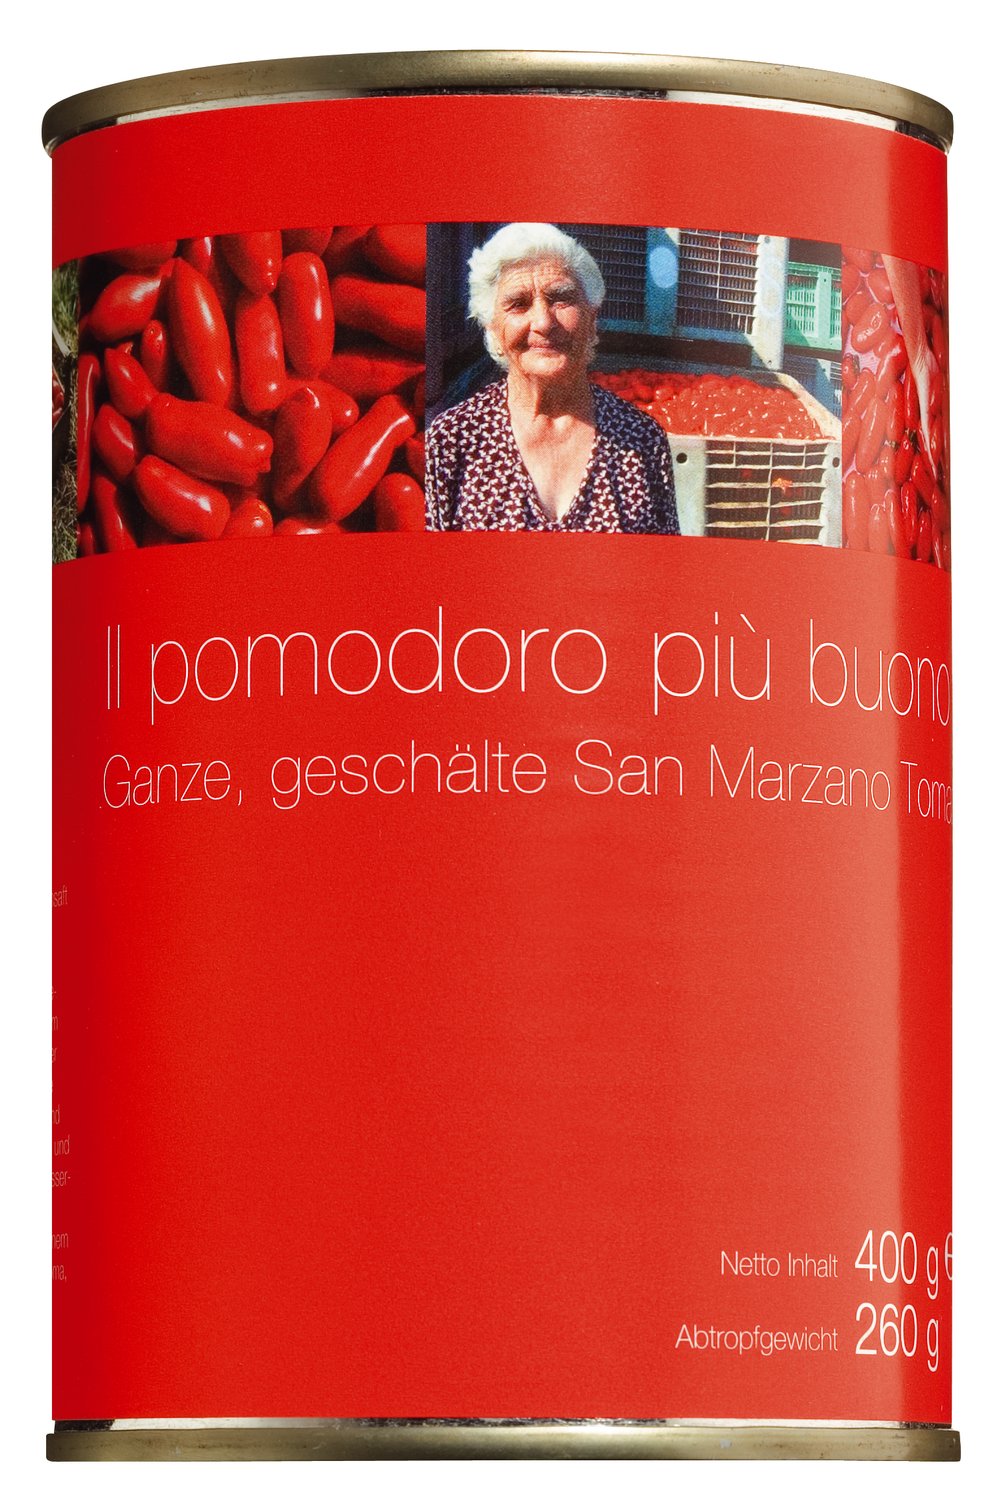 San Marsano gepelde tomaten 400 g